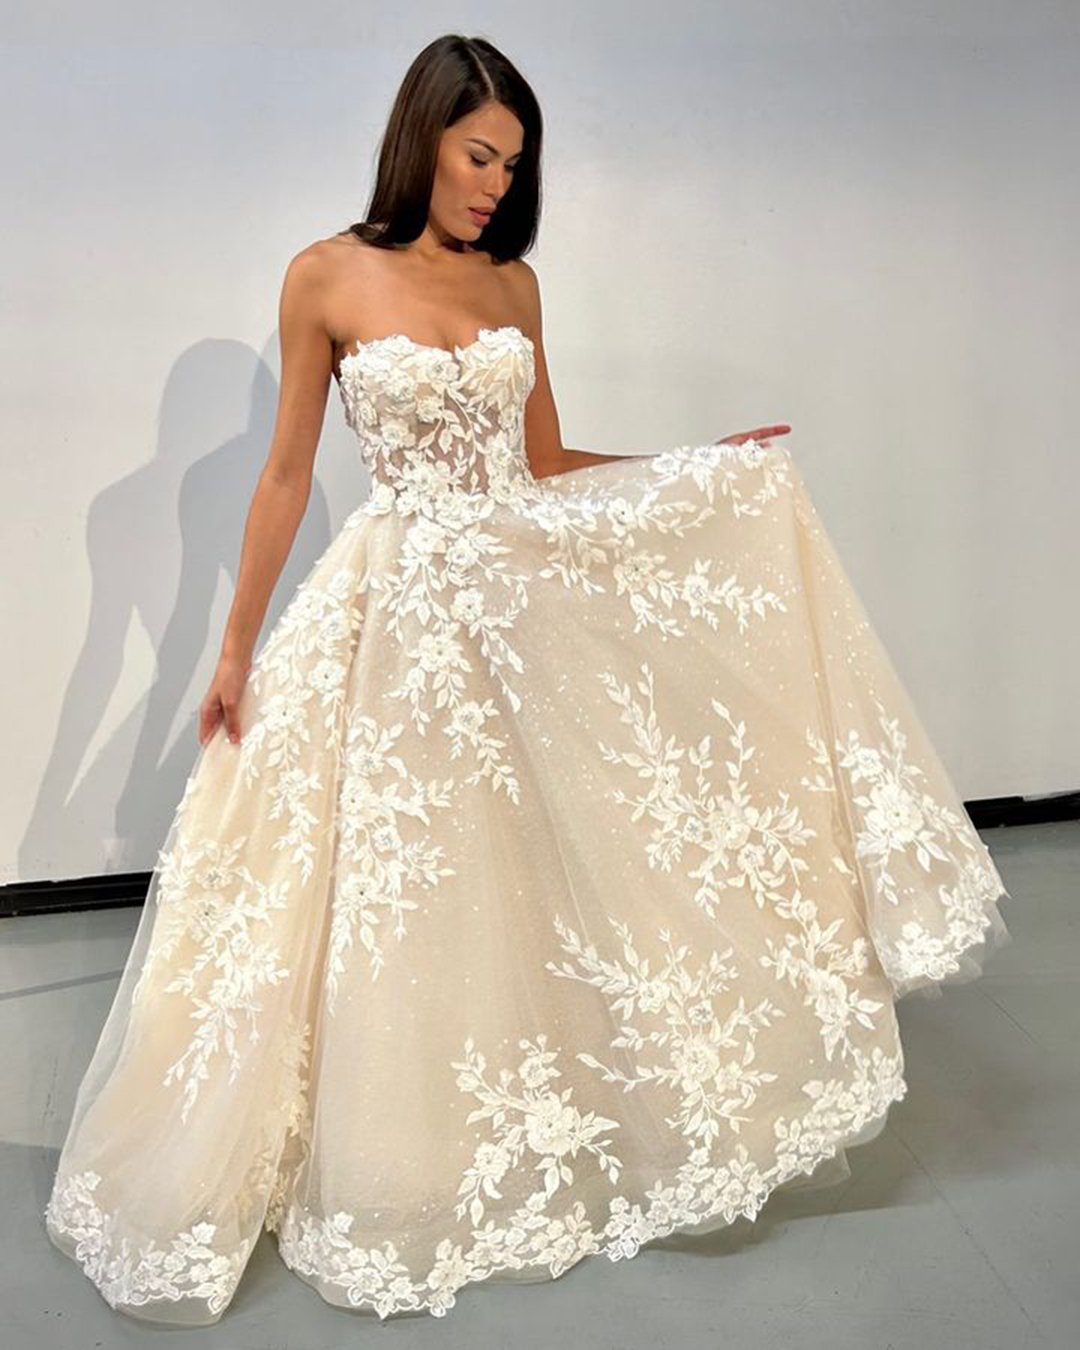 sweetheart neckline wedding dress floral lace strapless neckline eveofmilady